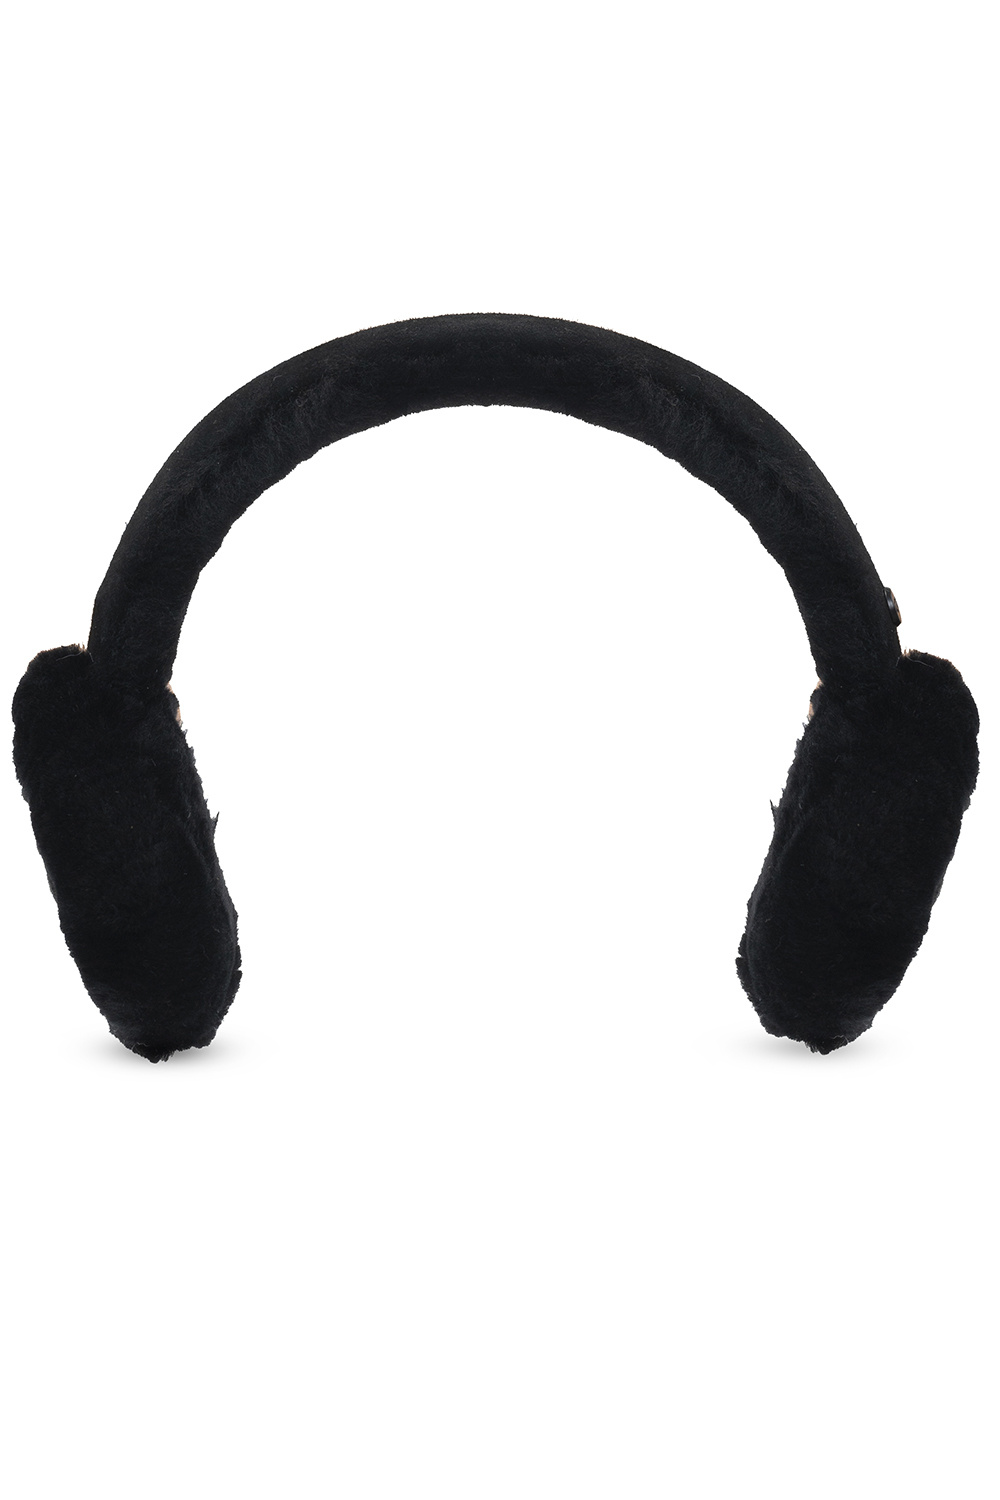 UGG Wireless earmuffs